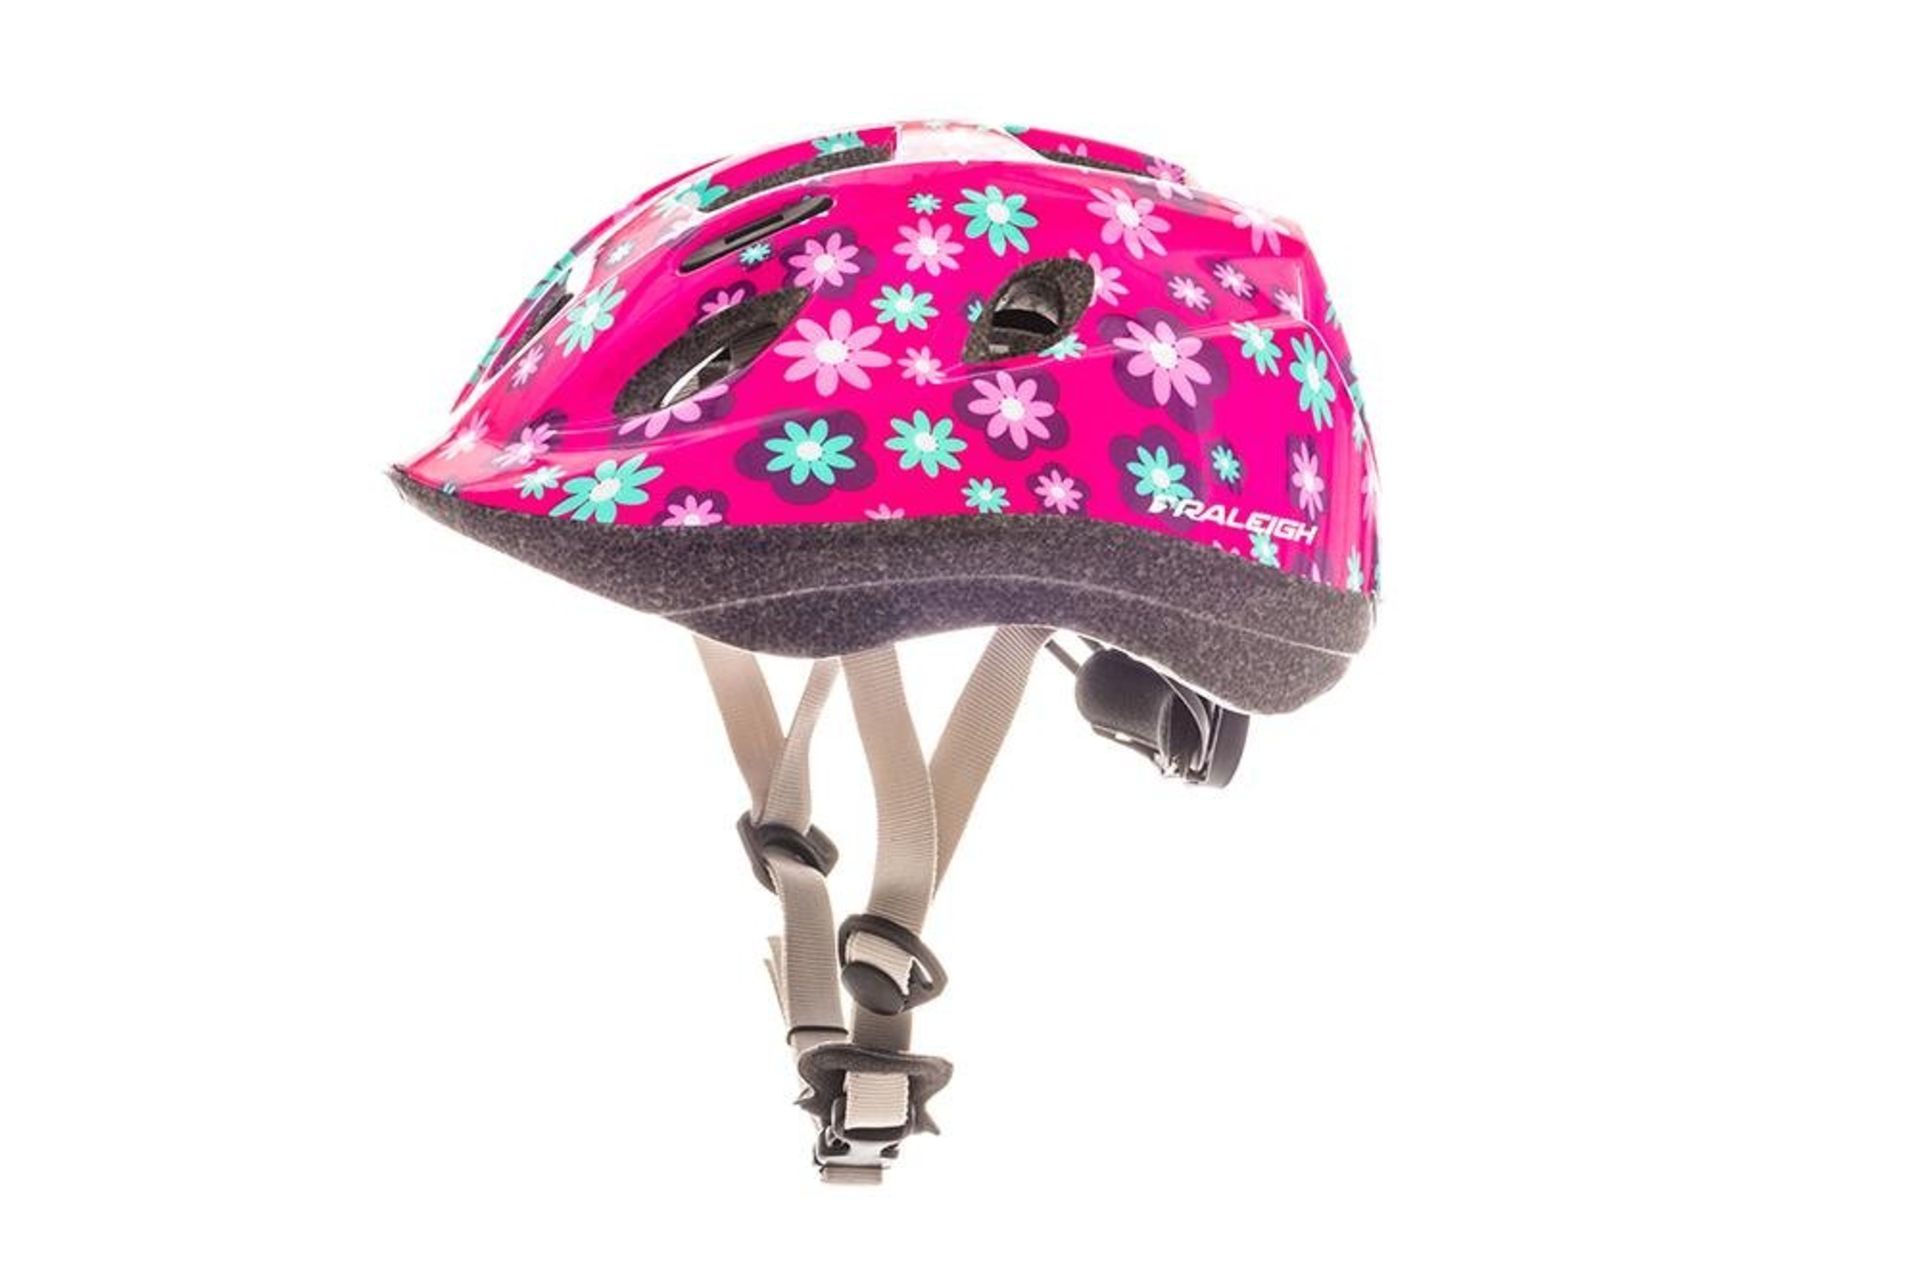 Raleigh Kids' Mystery Dottie Cycle Helmet, Multi-Colour, 52-57 cm